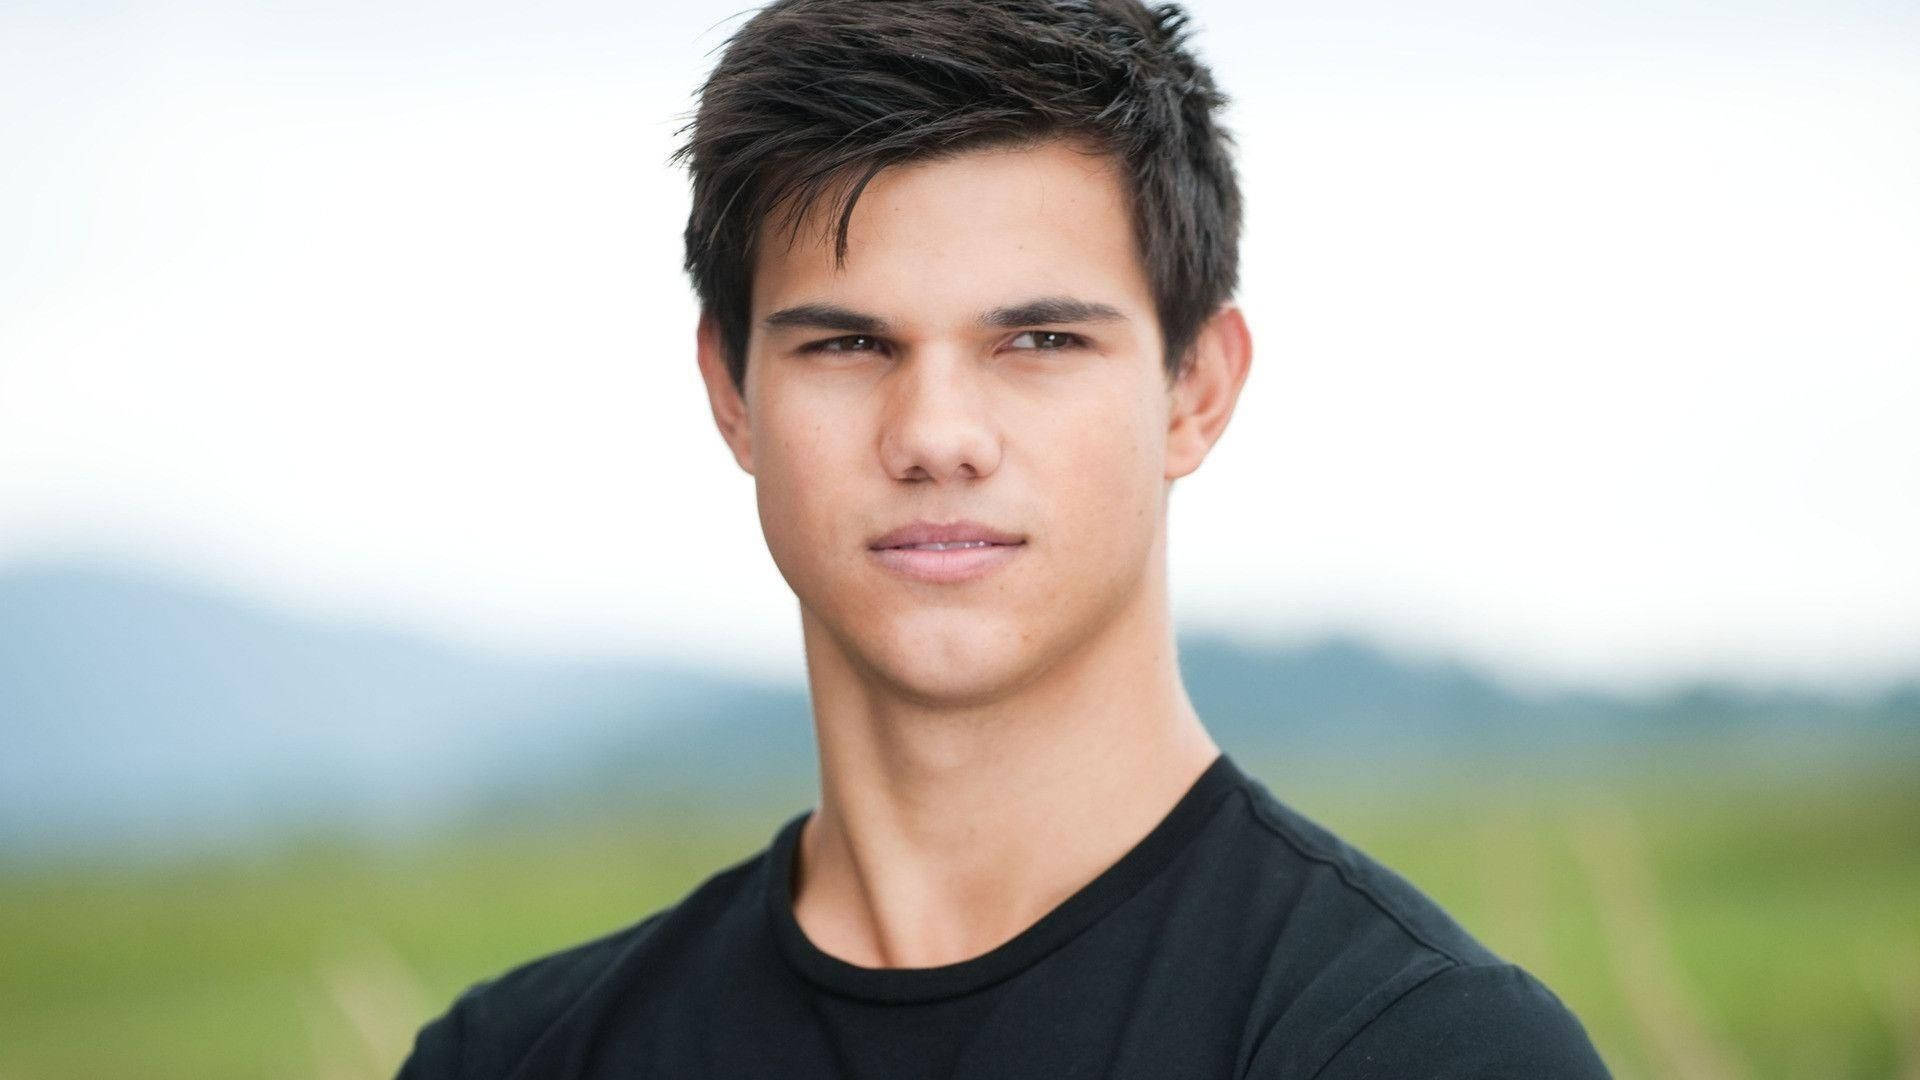 Appealing Actor Taylor Lautner Background